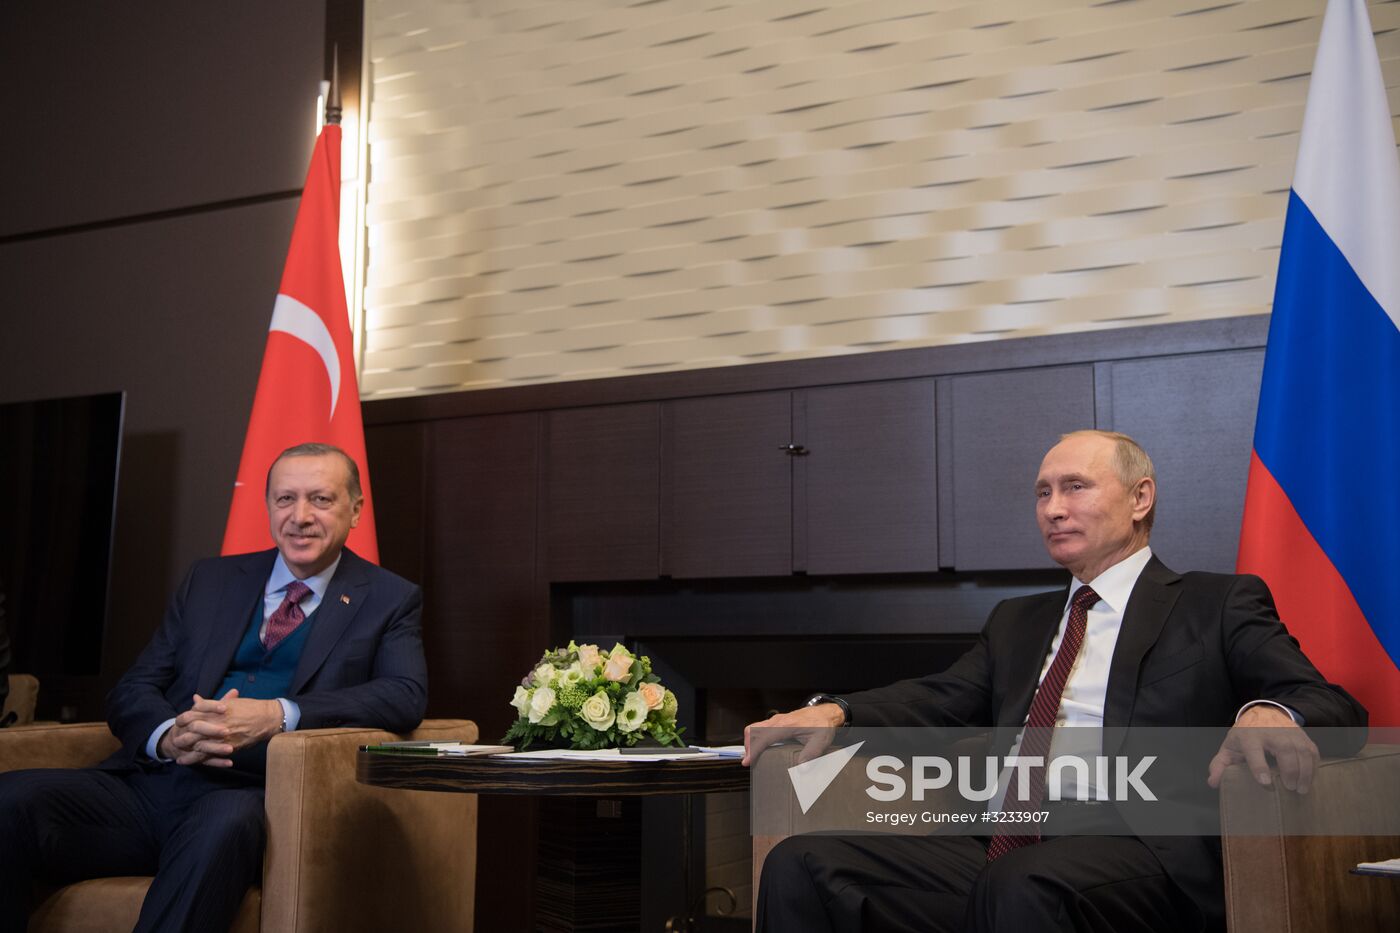 President Vladimir Putin meets with Turkish President Recep Tayyip Erdogan